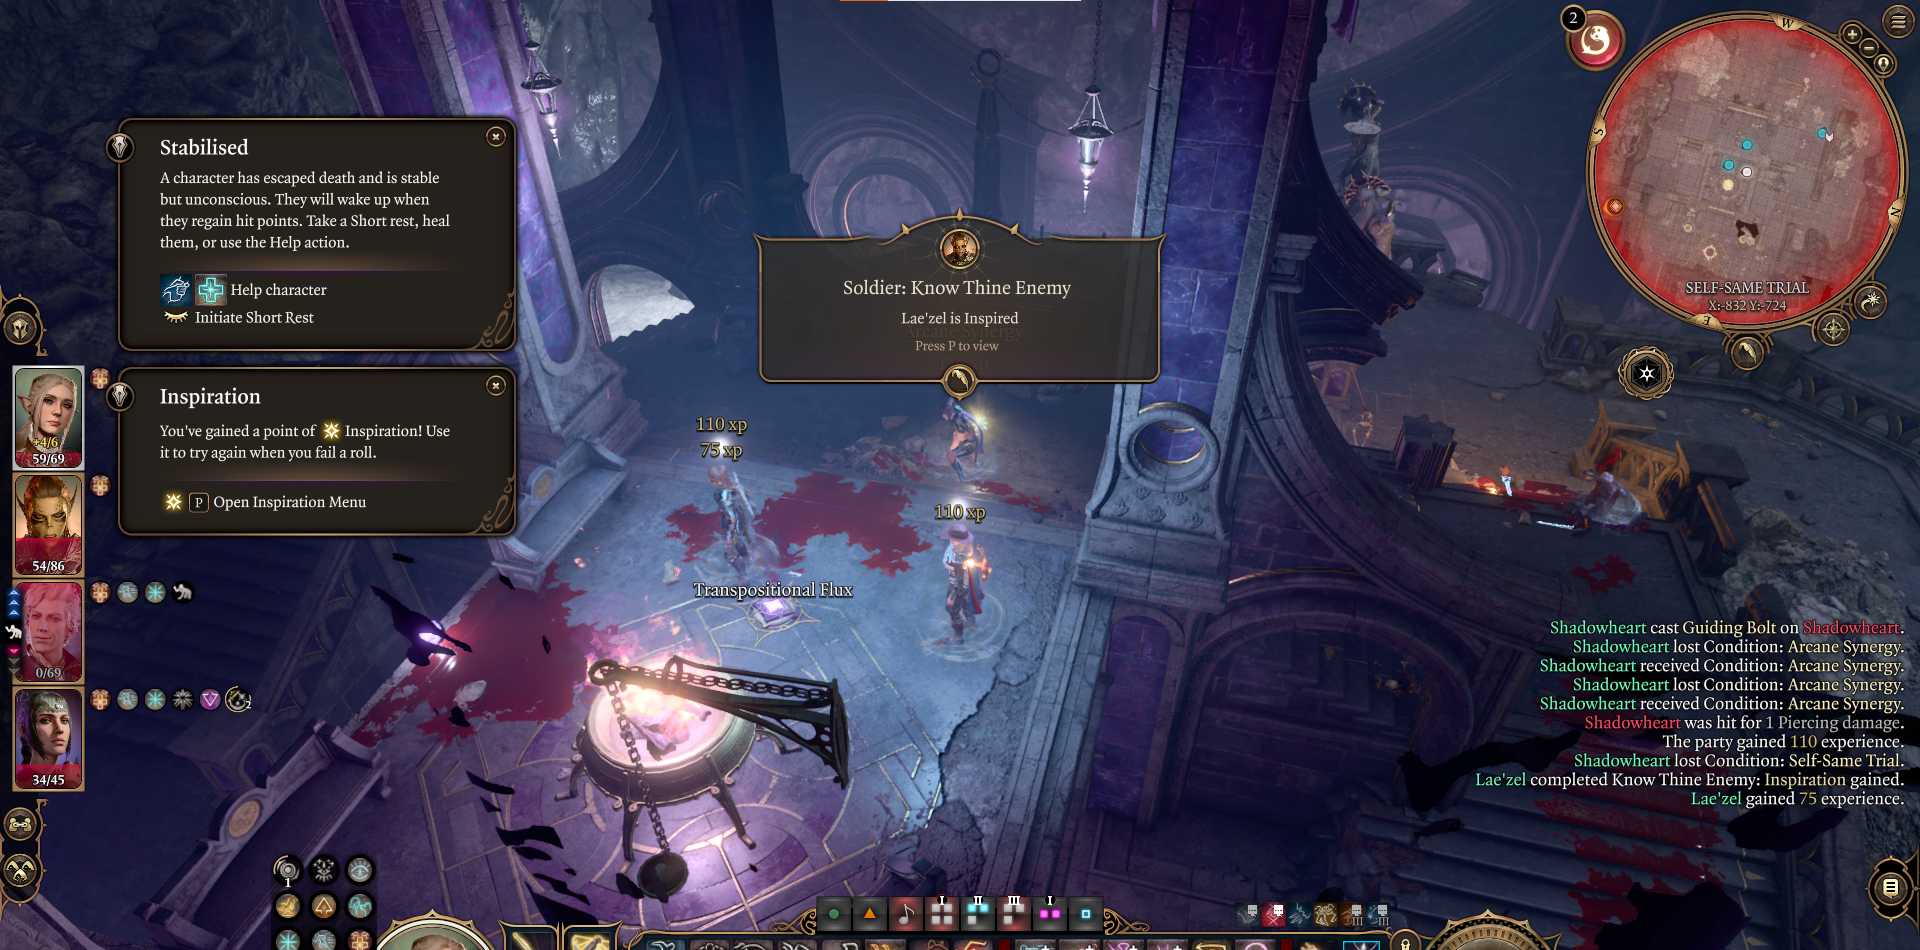 A screenshot showing a completed Self-Same Trial in Baldur's Gate 3. 